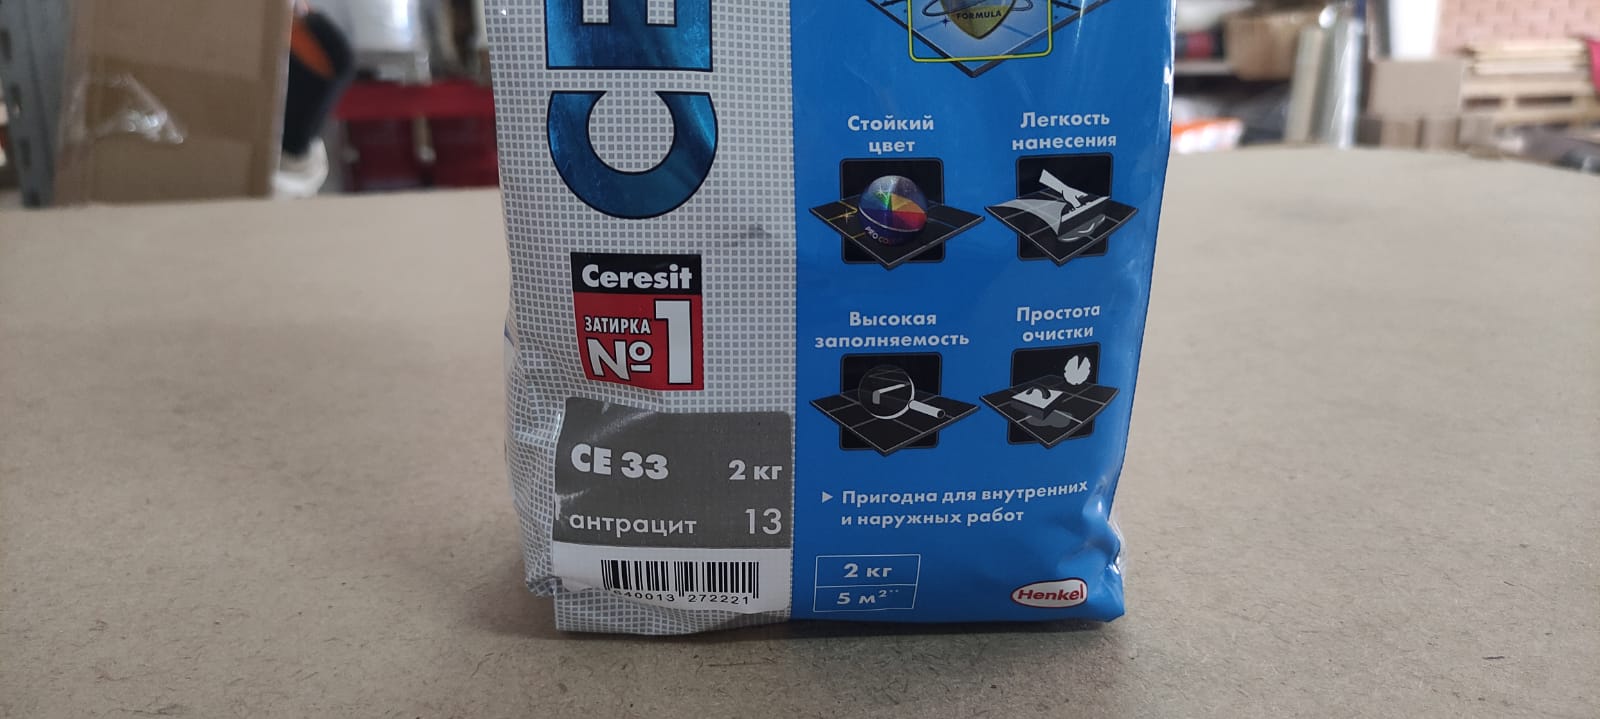 Затирка для швов 1-6 мм Ceresit / Церезит СЕ 33 Comfort 2 кг (цвет: Антрацит)